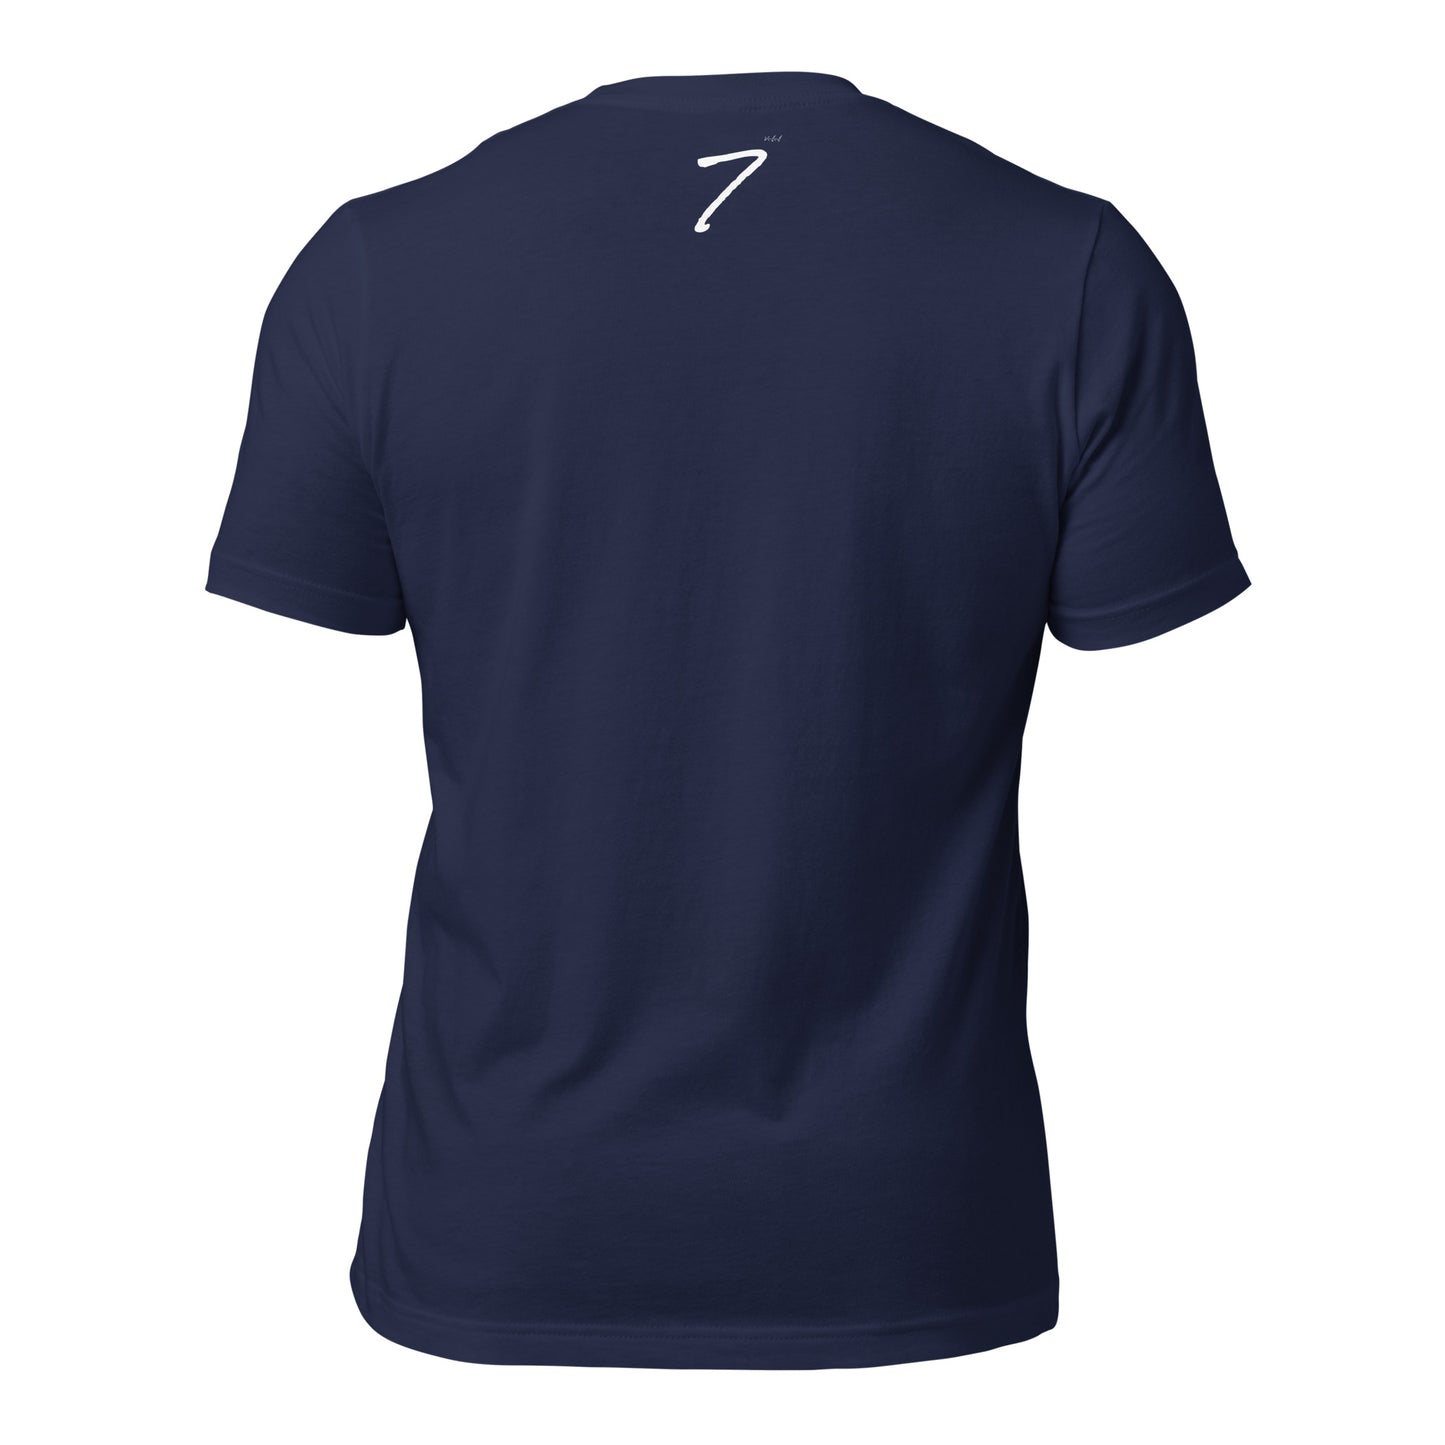 7 Numeral Unisex t-shirt